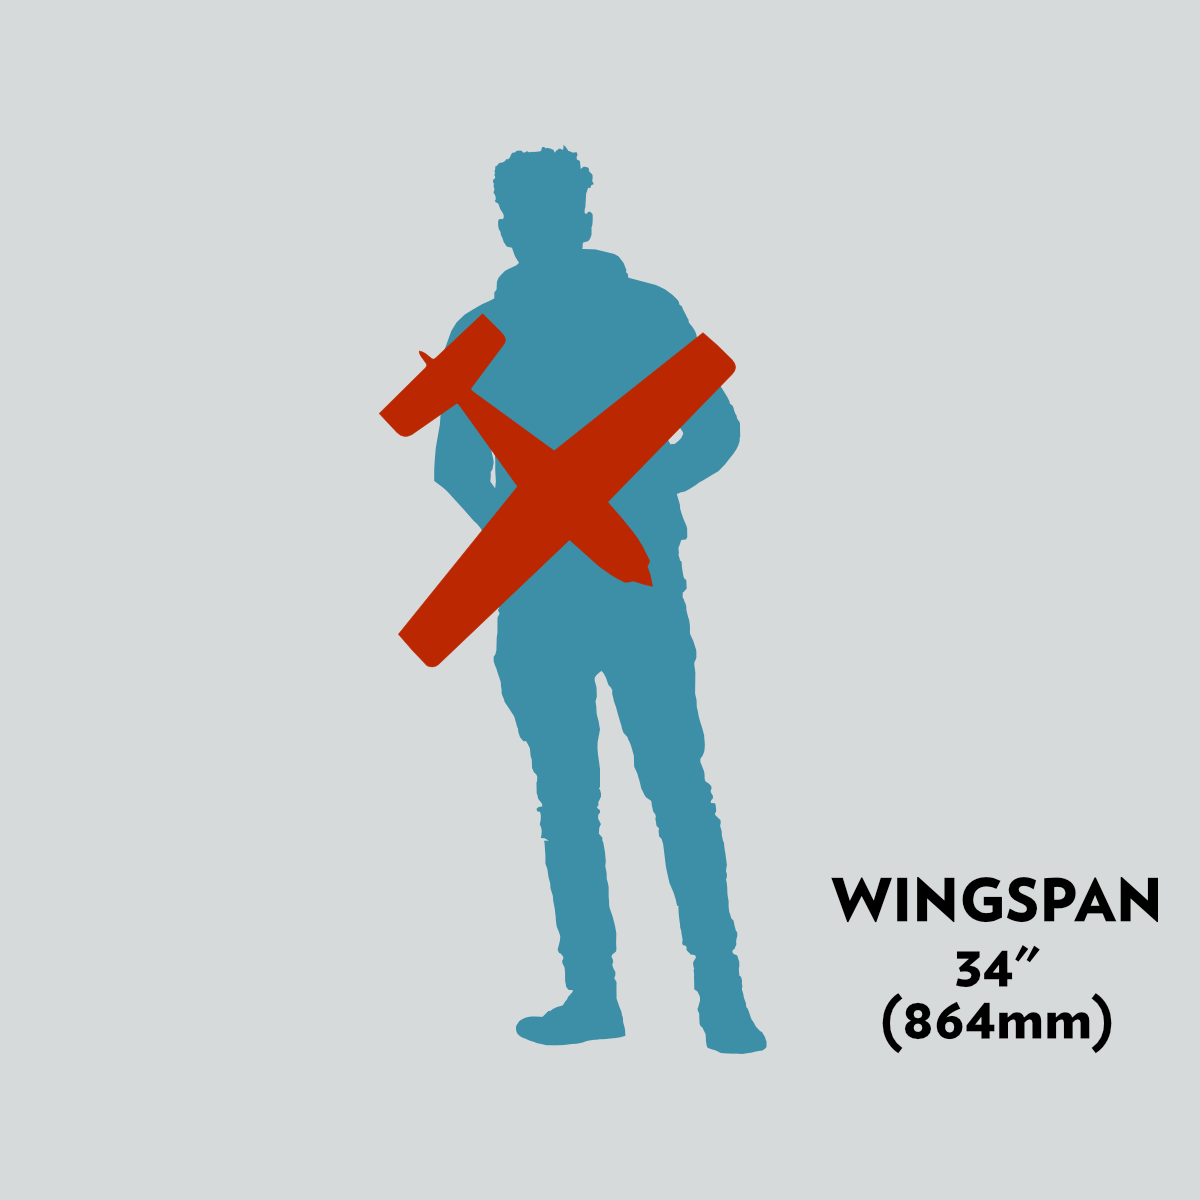 34" (864mm) Wingspan